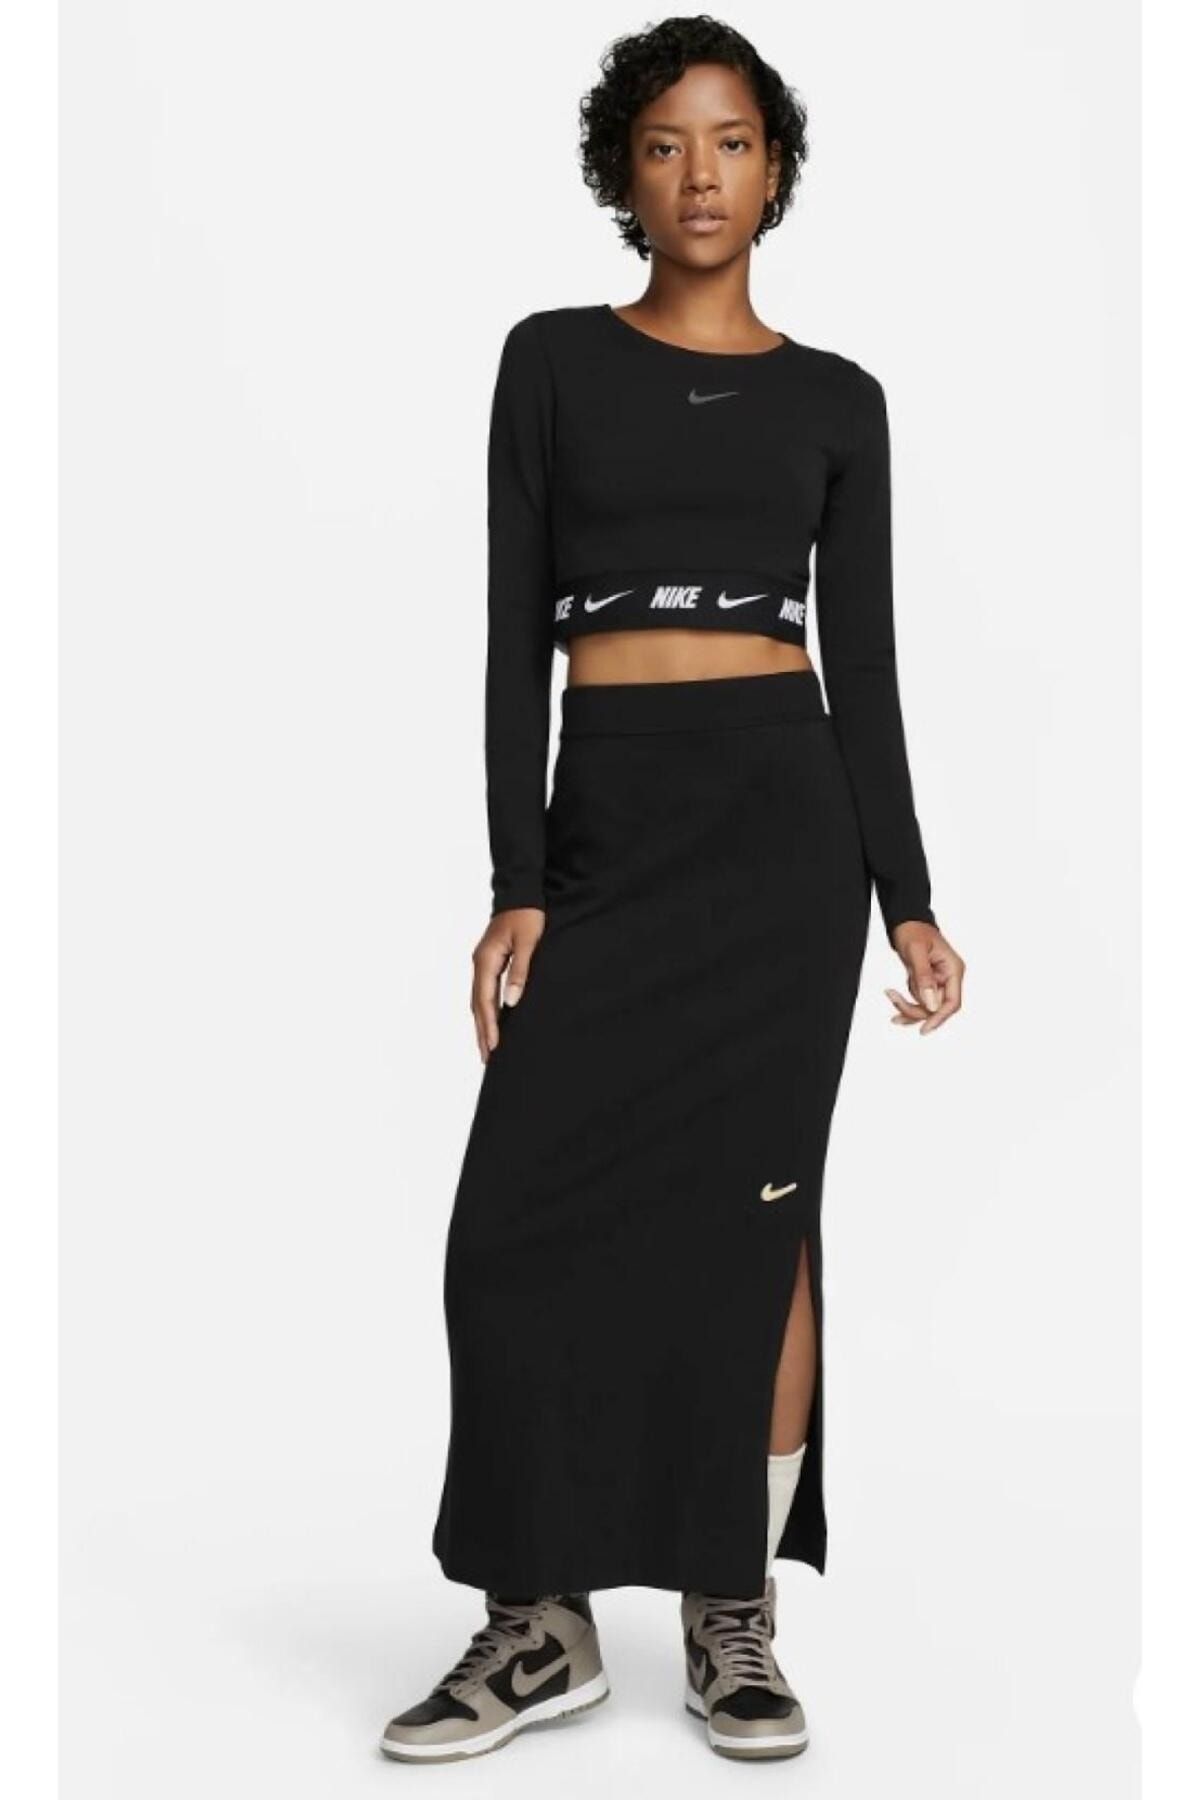 Nike Kadın Siyah Uzun Kollu Crop T-shirt DX2315-010